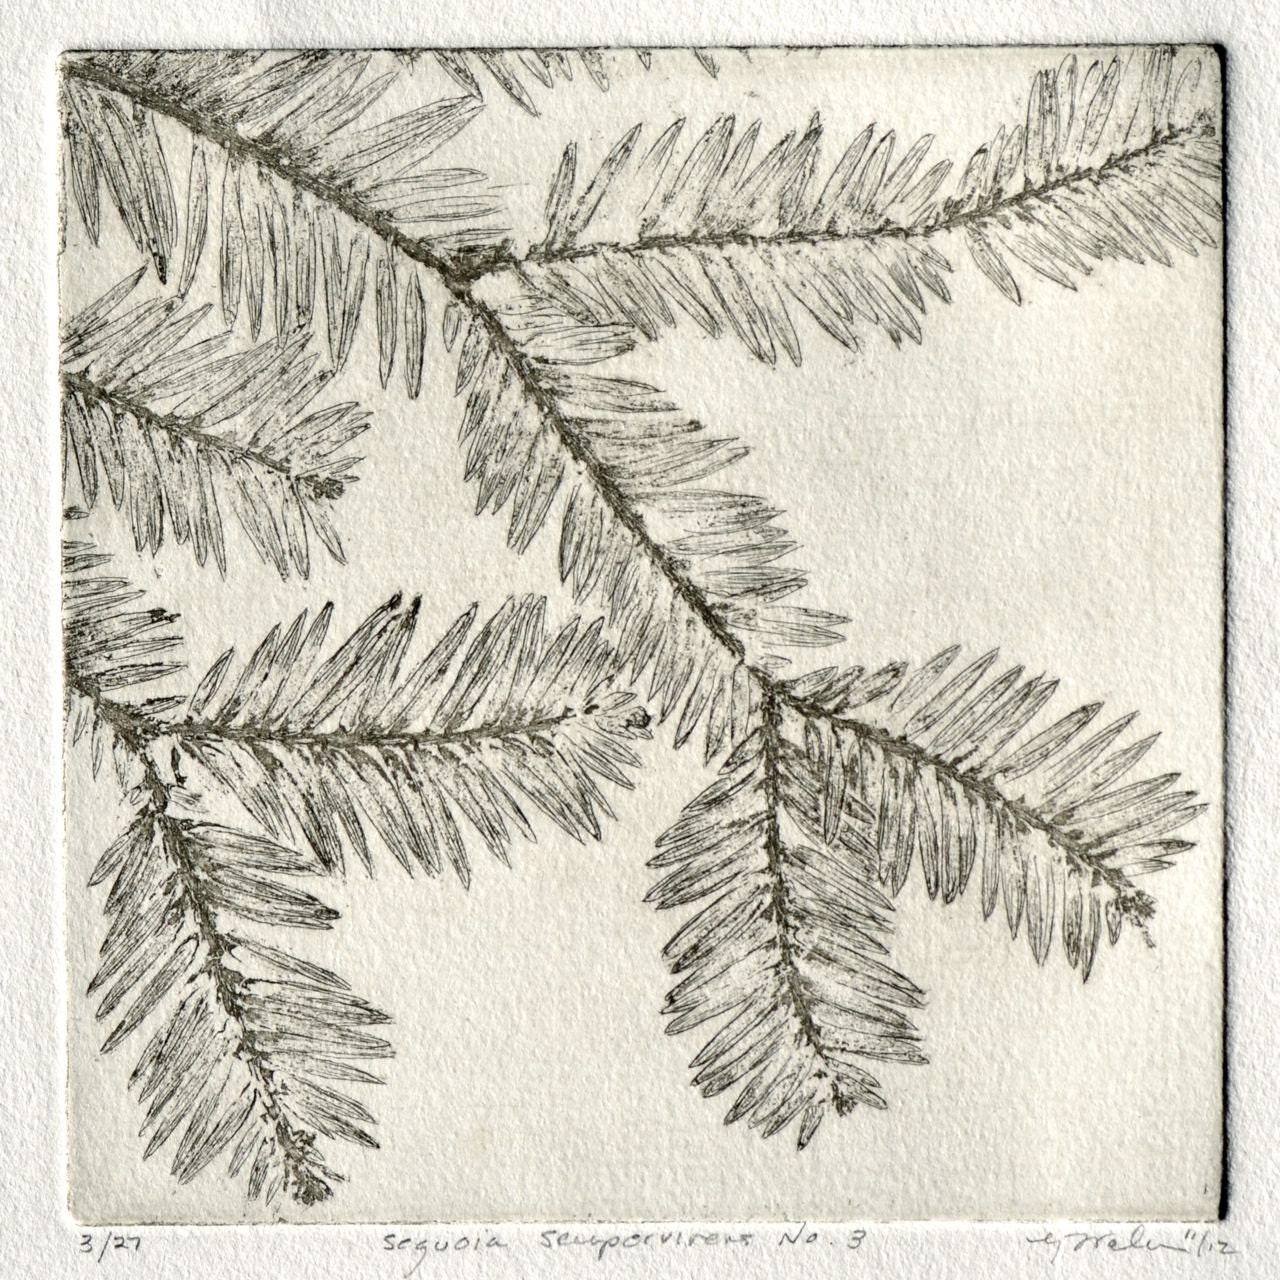 SEQUOIA SEMPERVIRENS No. 3, original copperplate etching, Coastal Redwood frond in a warm gray - RedTailStudios